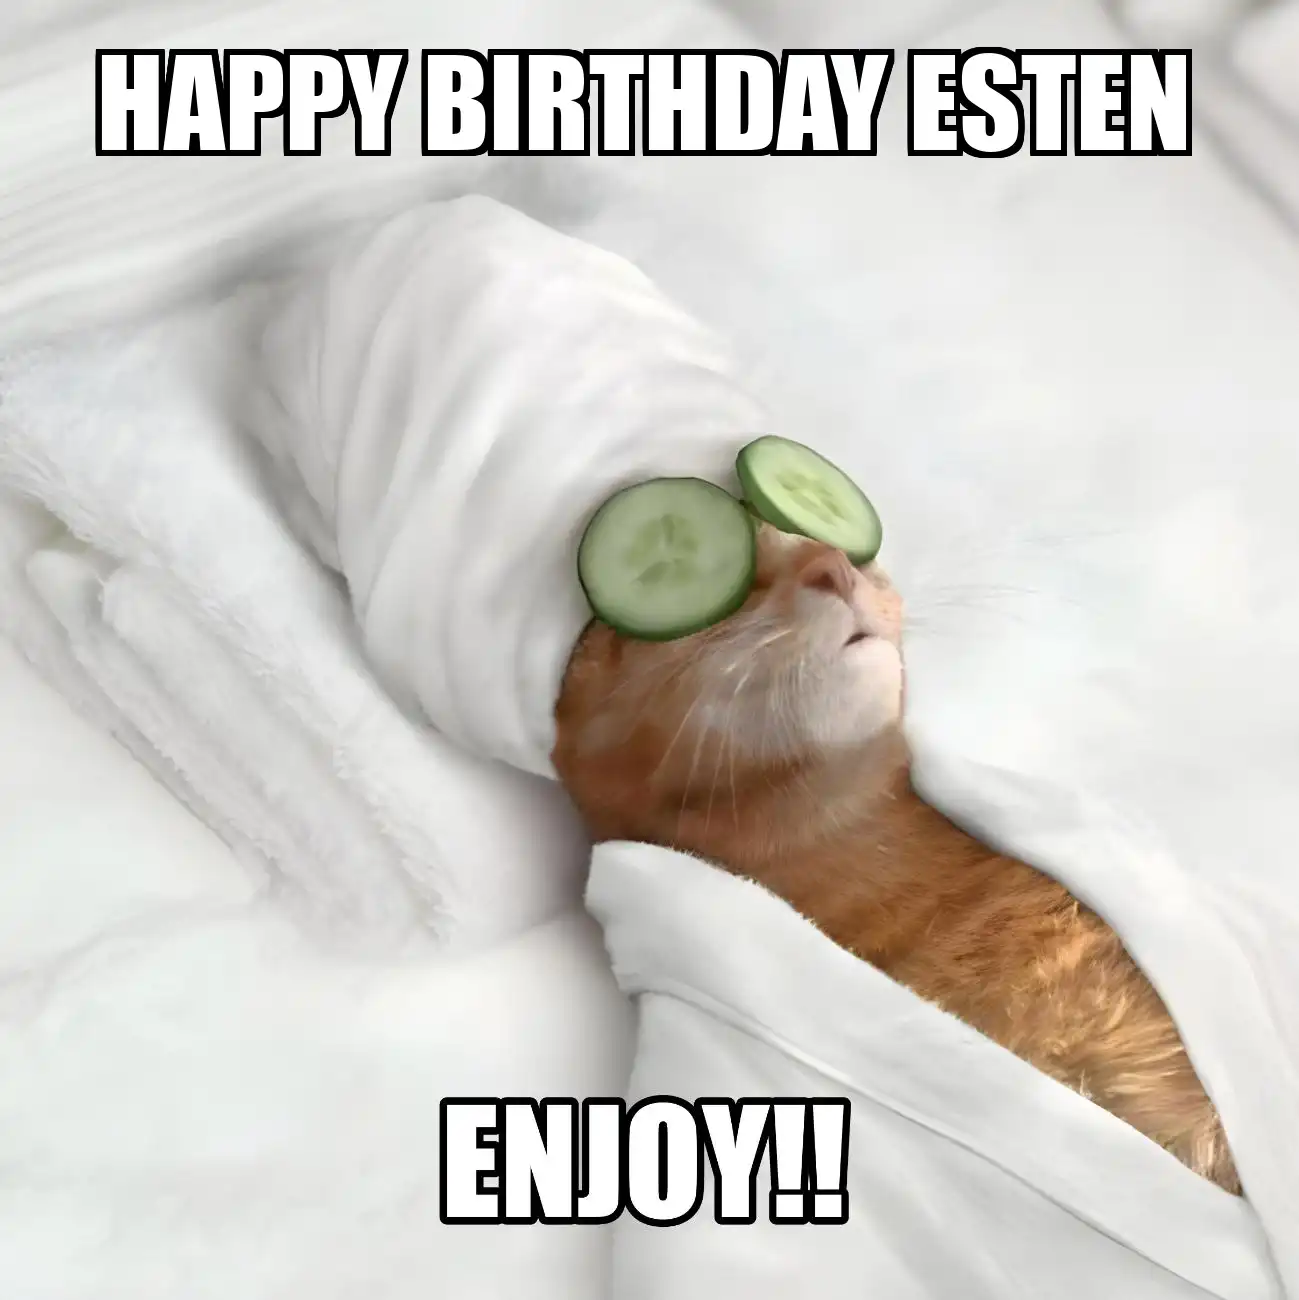 Happy Birthday Esten Enjoy Cat Meme